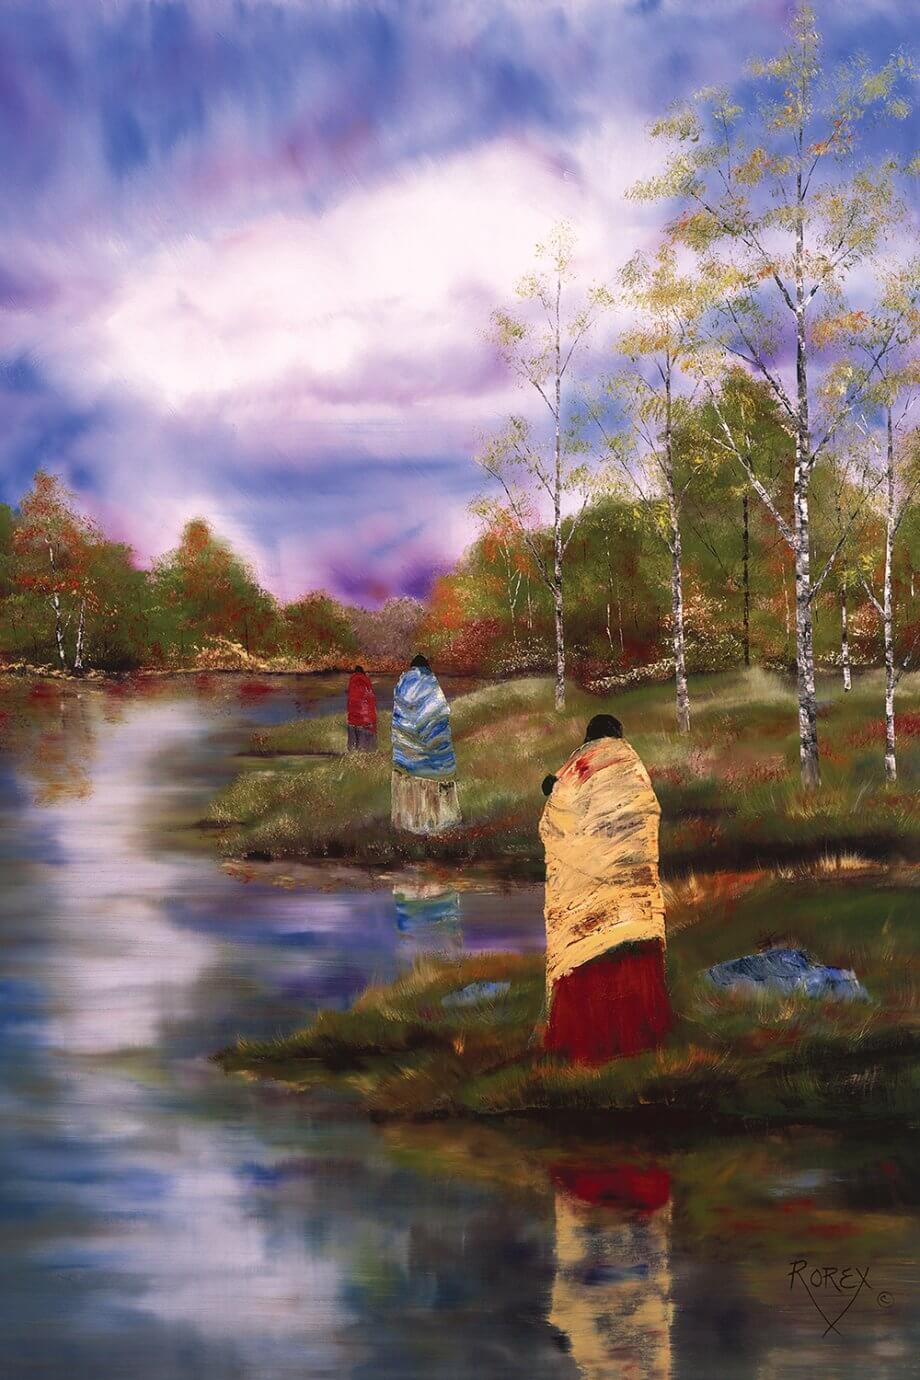 Rorex Bridges Studio painting - autumn waters